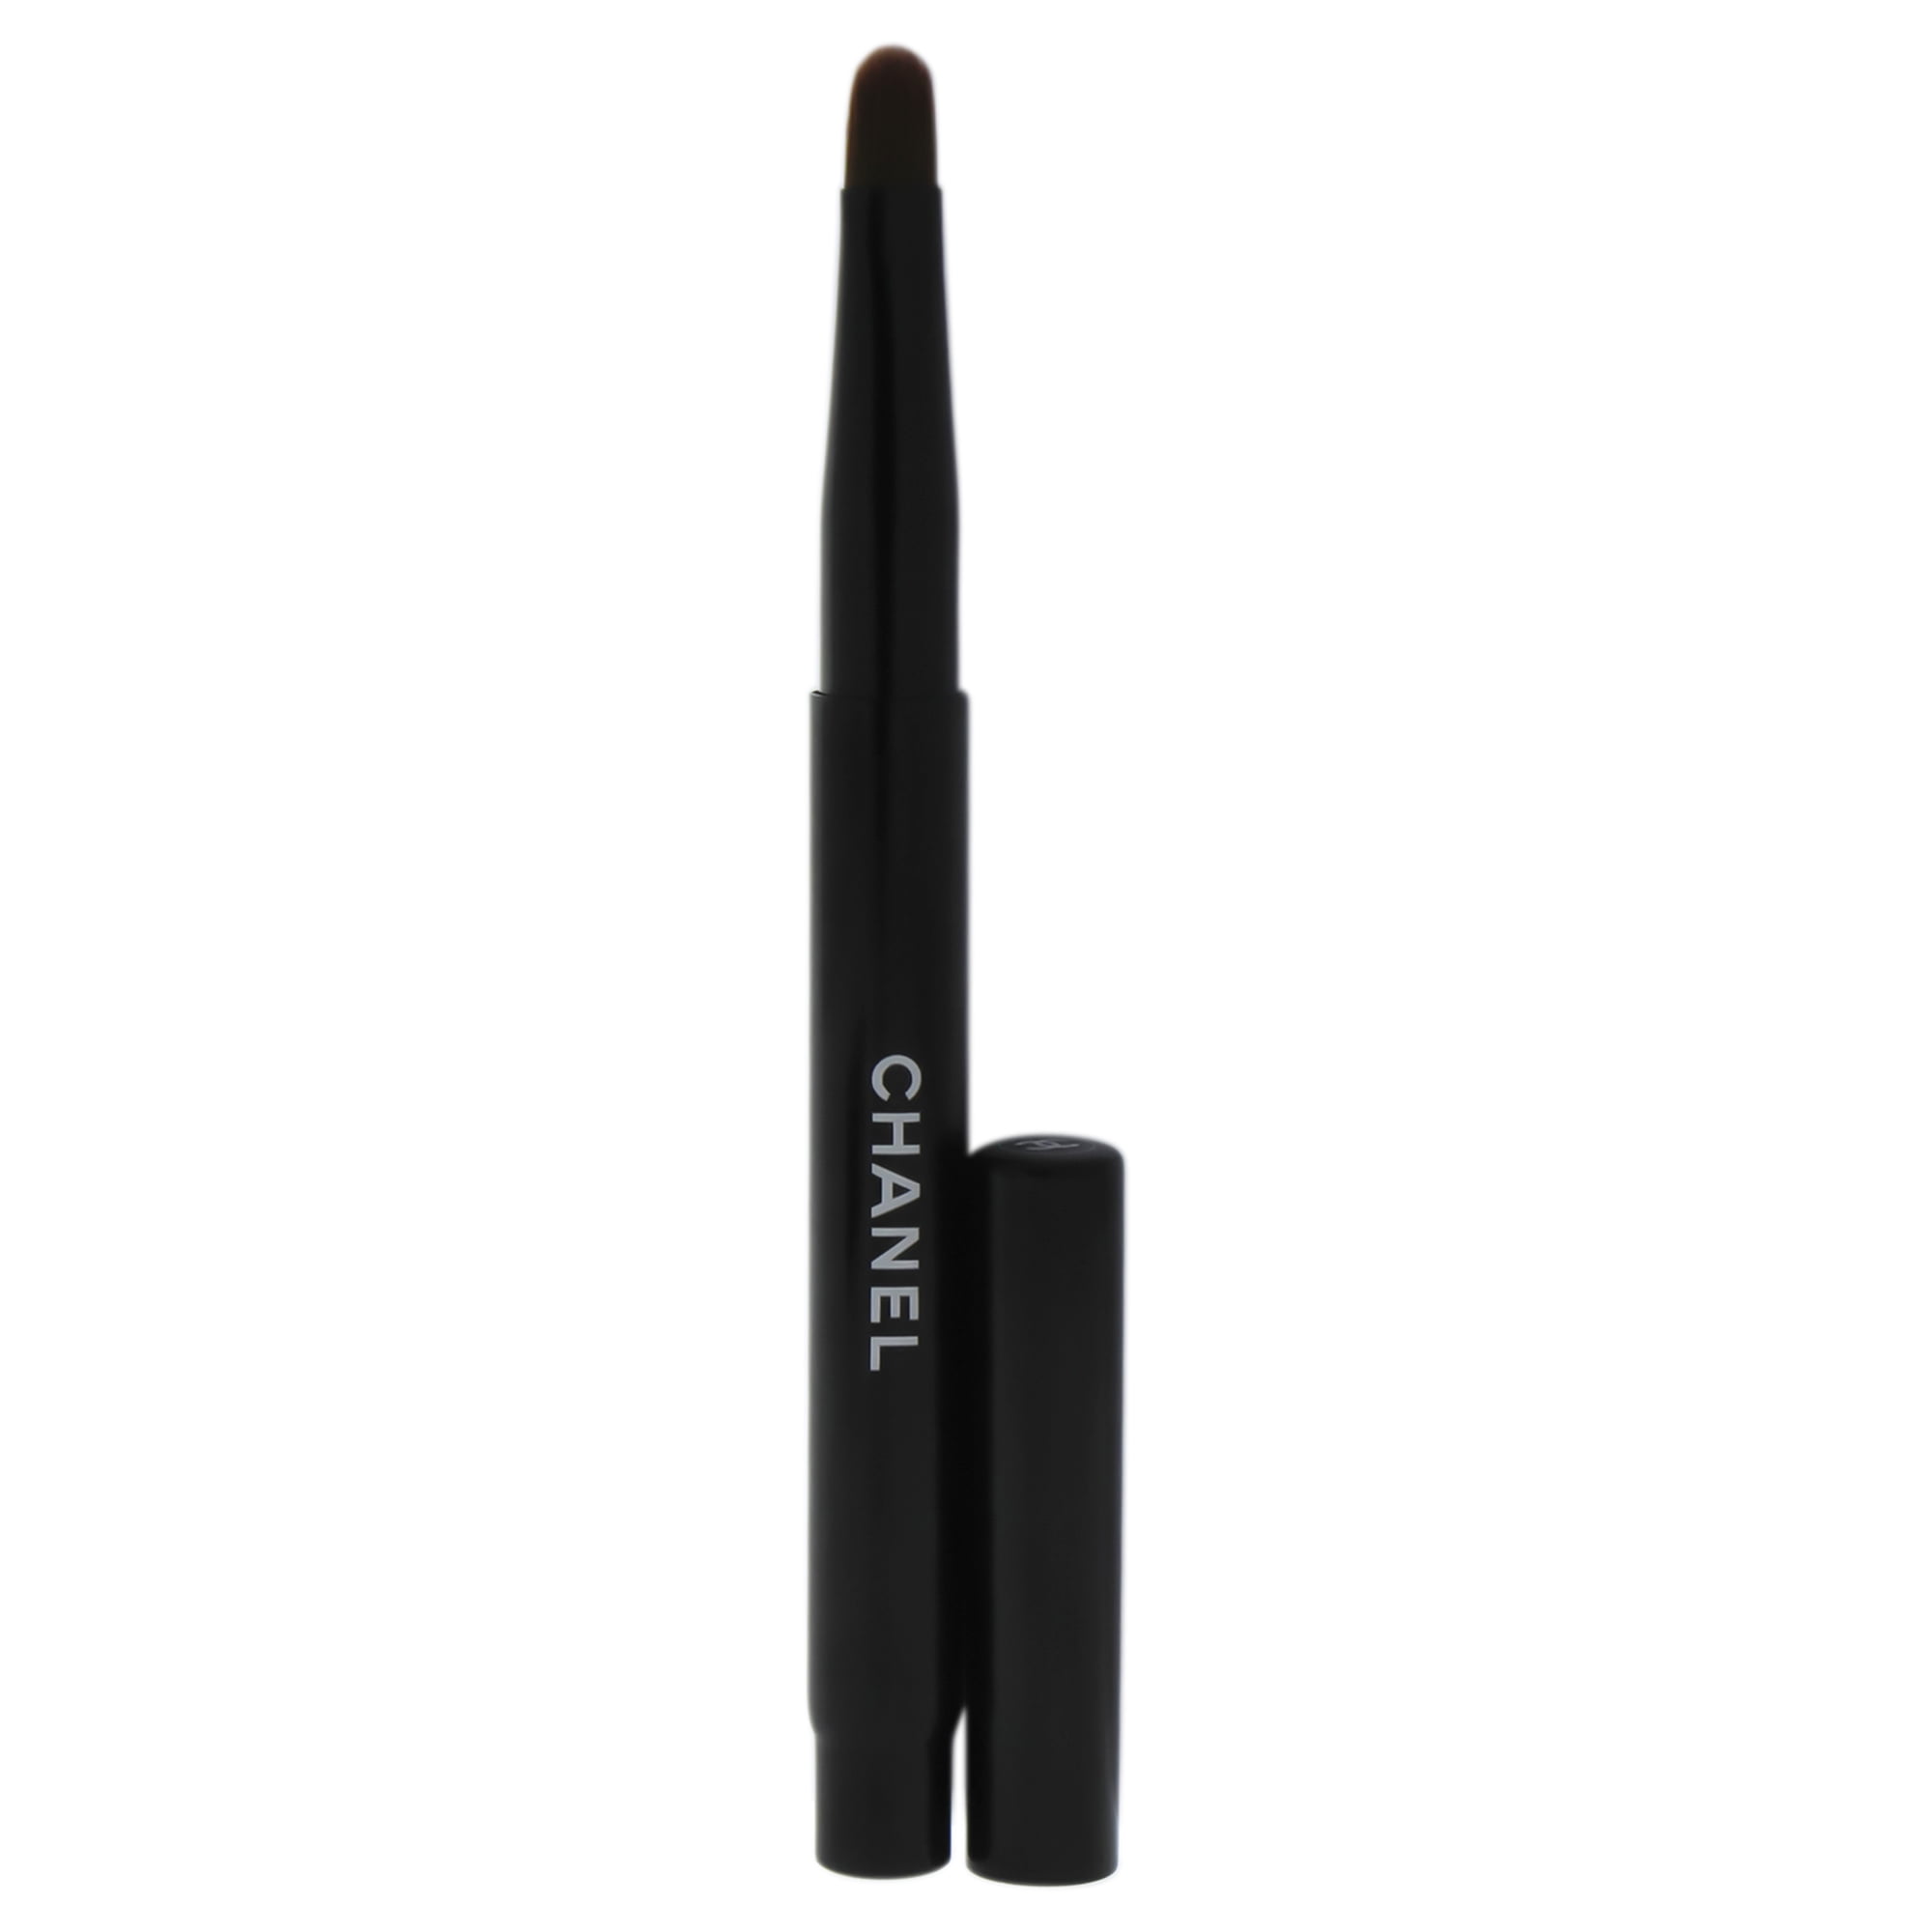 Retractable Lip Brush by Chanel for Women - 1 Pc Brush - Walmart